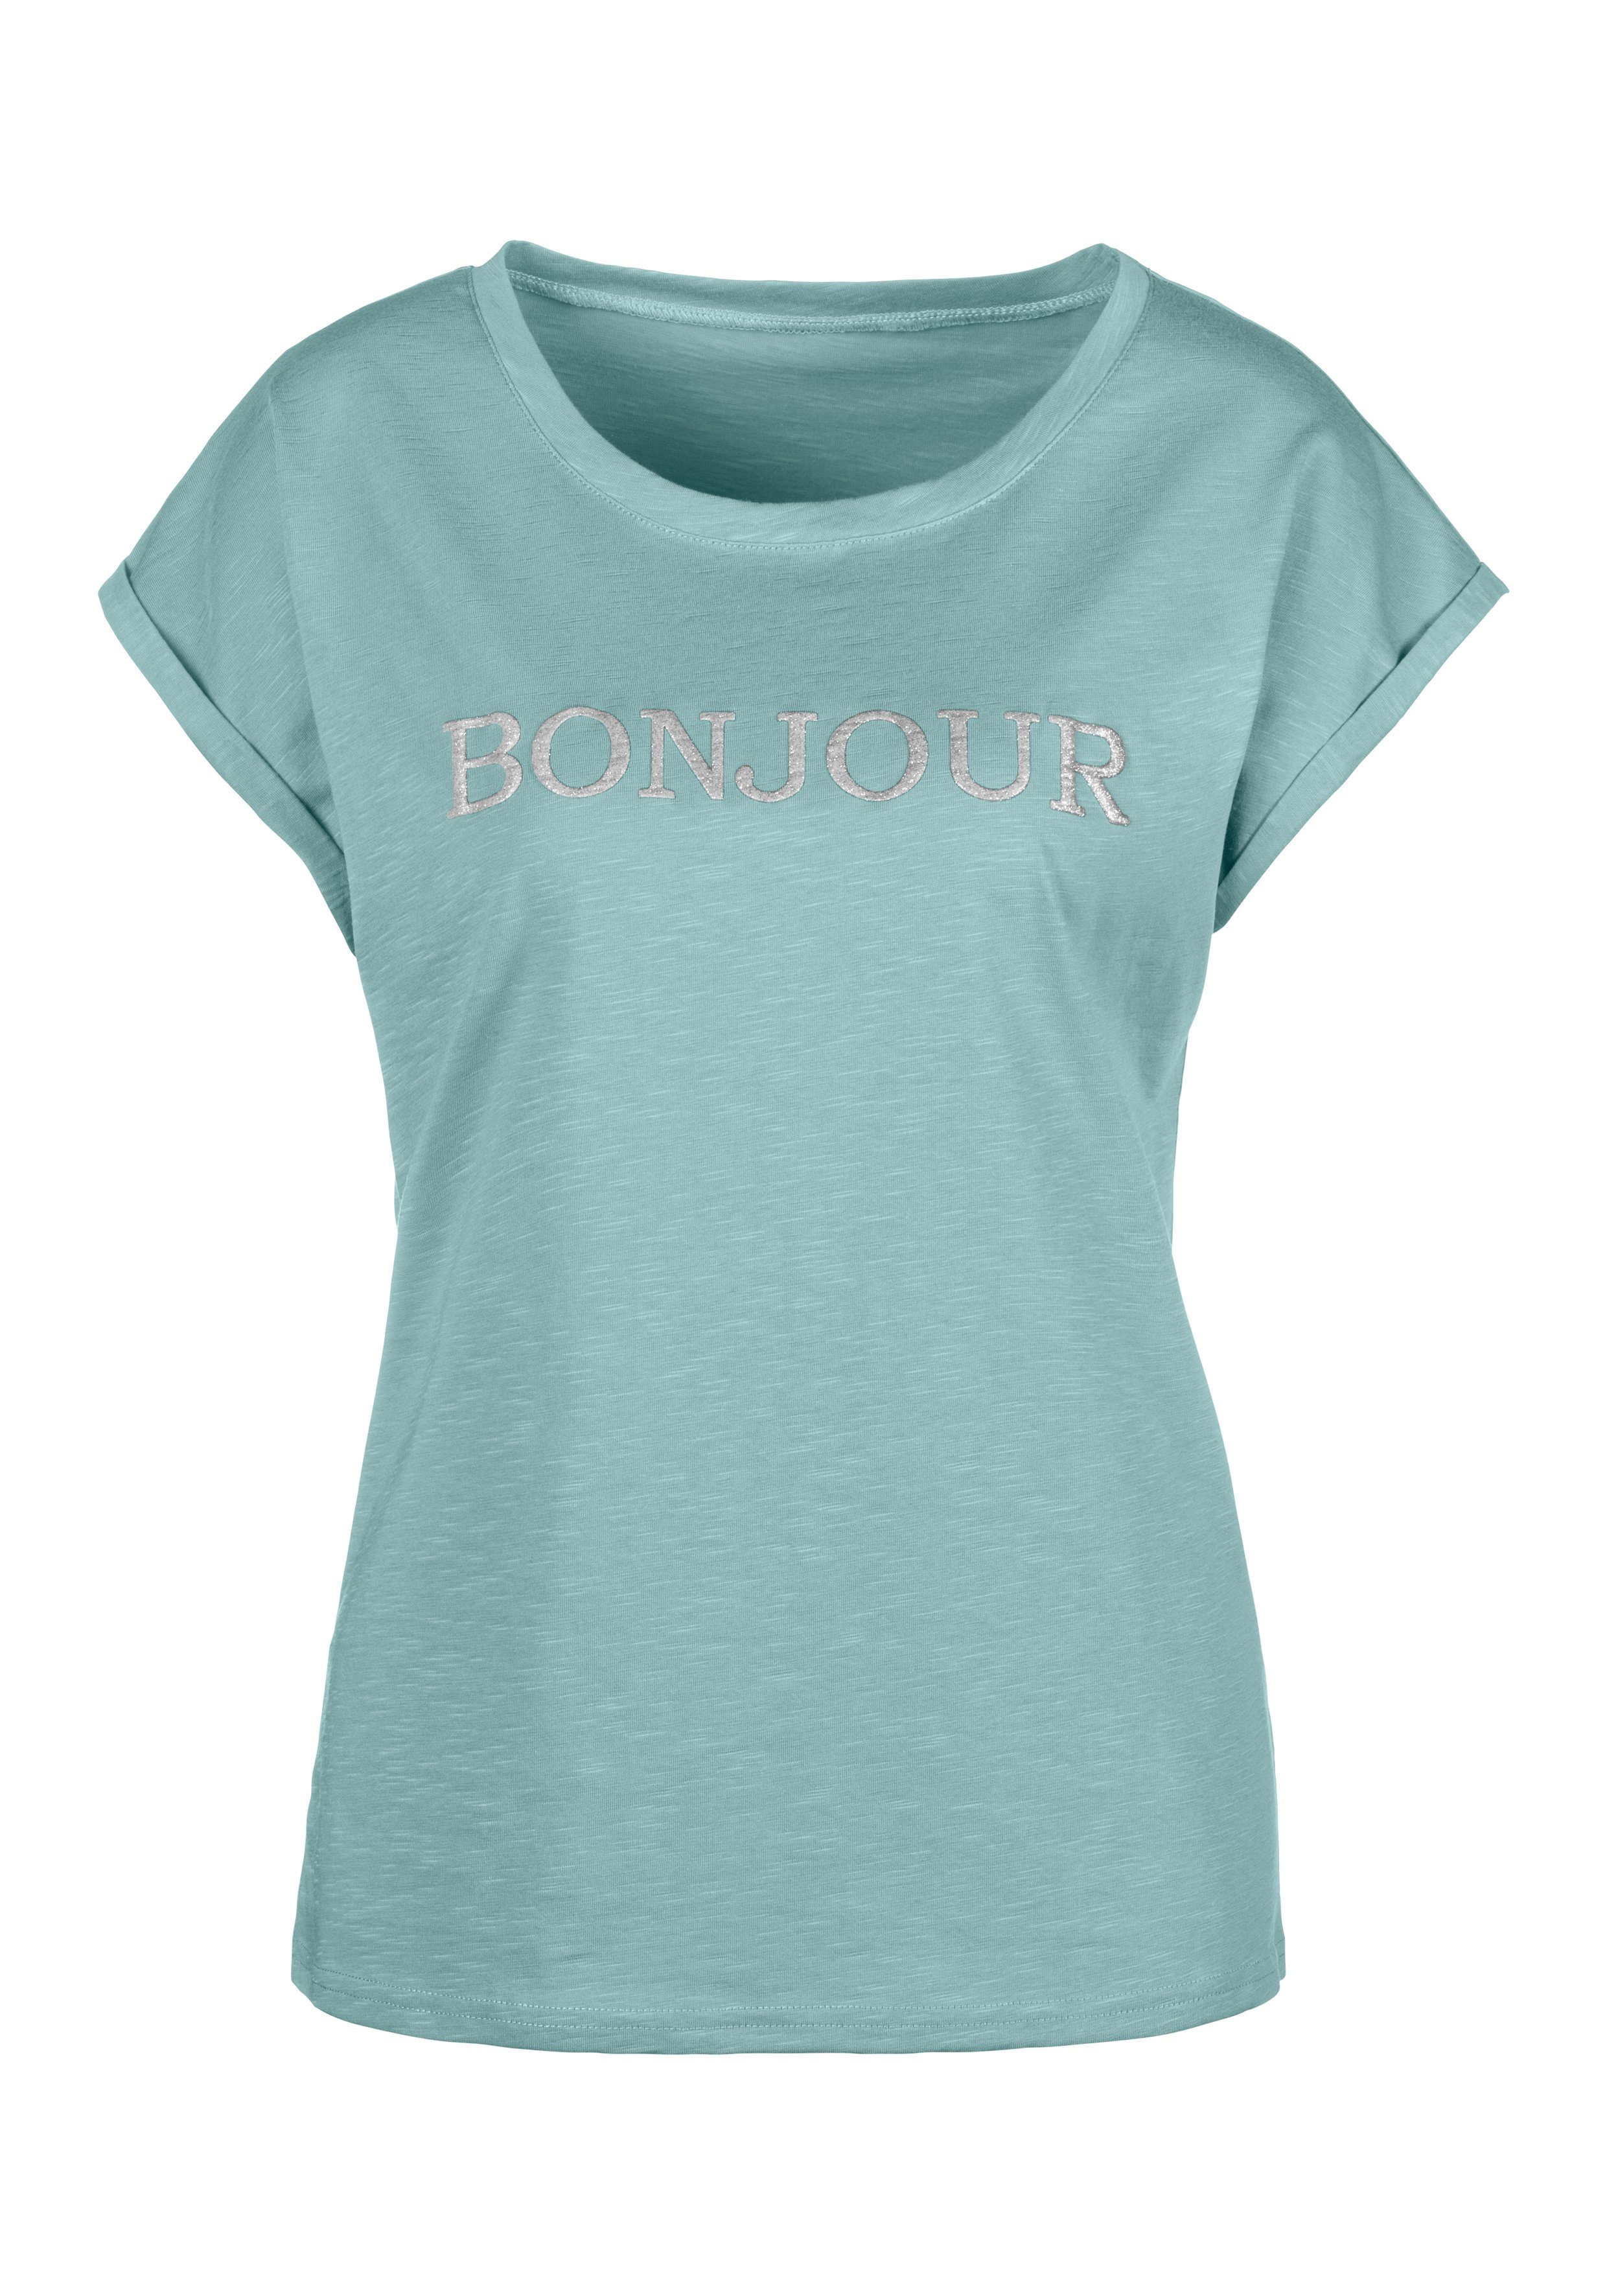 Vivance T-Shirt "Bonjour" mint modischem Frontdruck mit